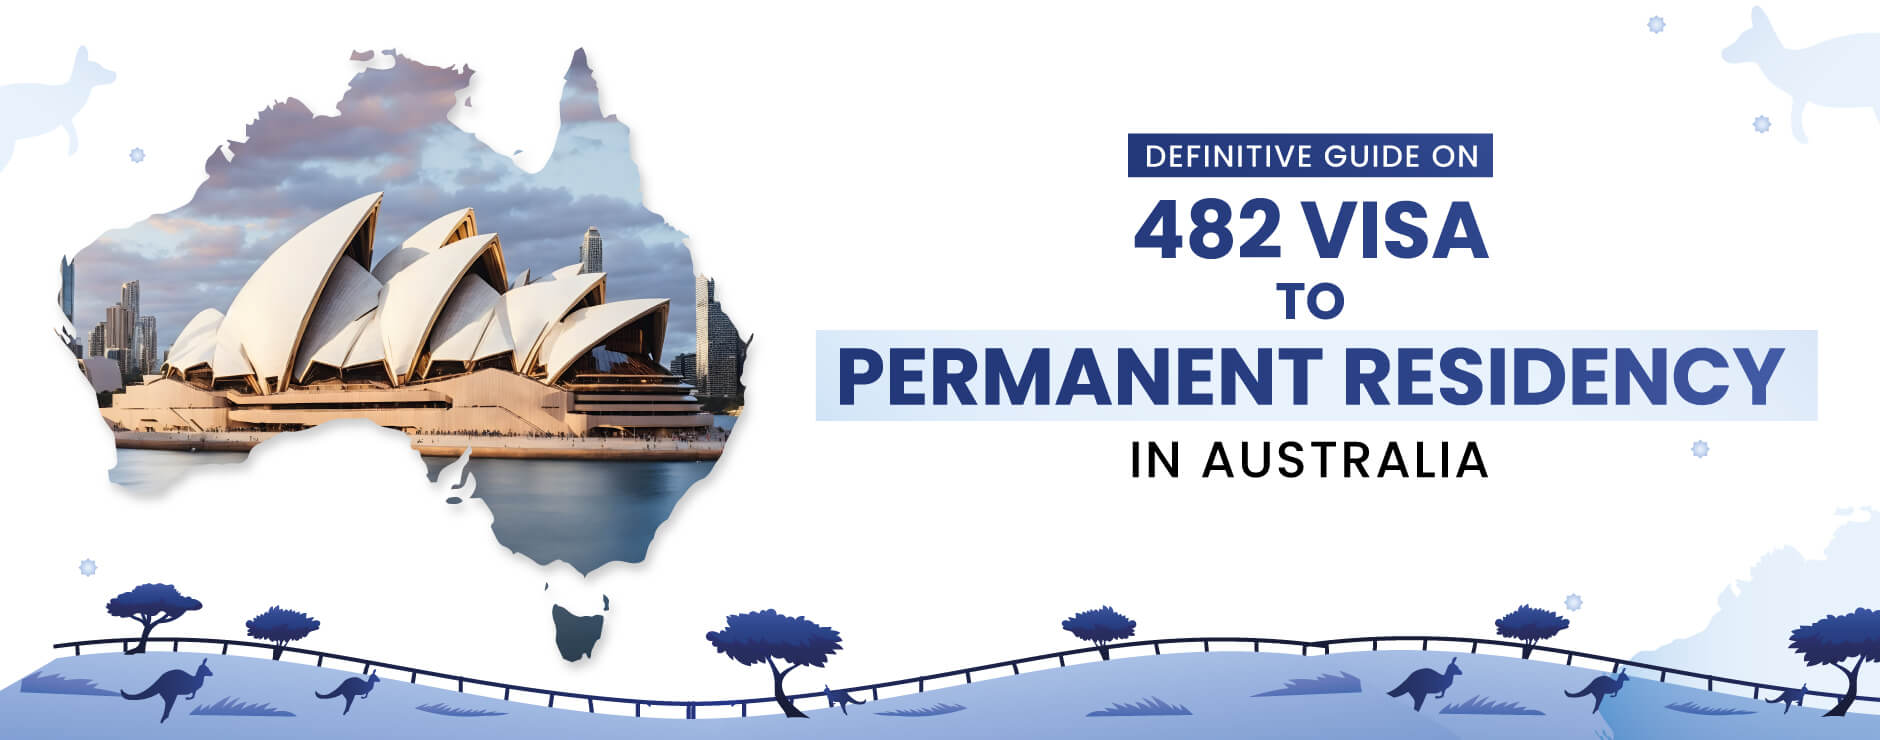 Definitive Guide on Australian 482 Visa to Permanent Residency